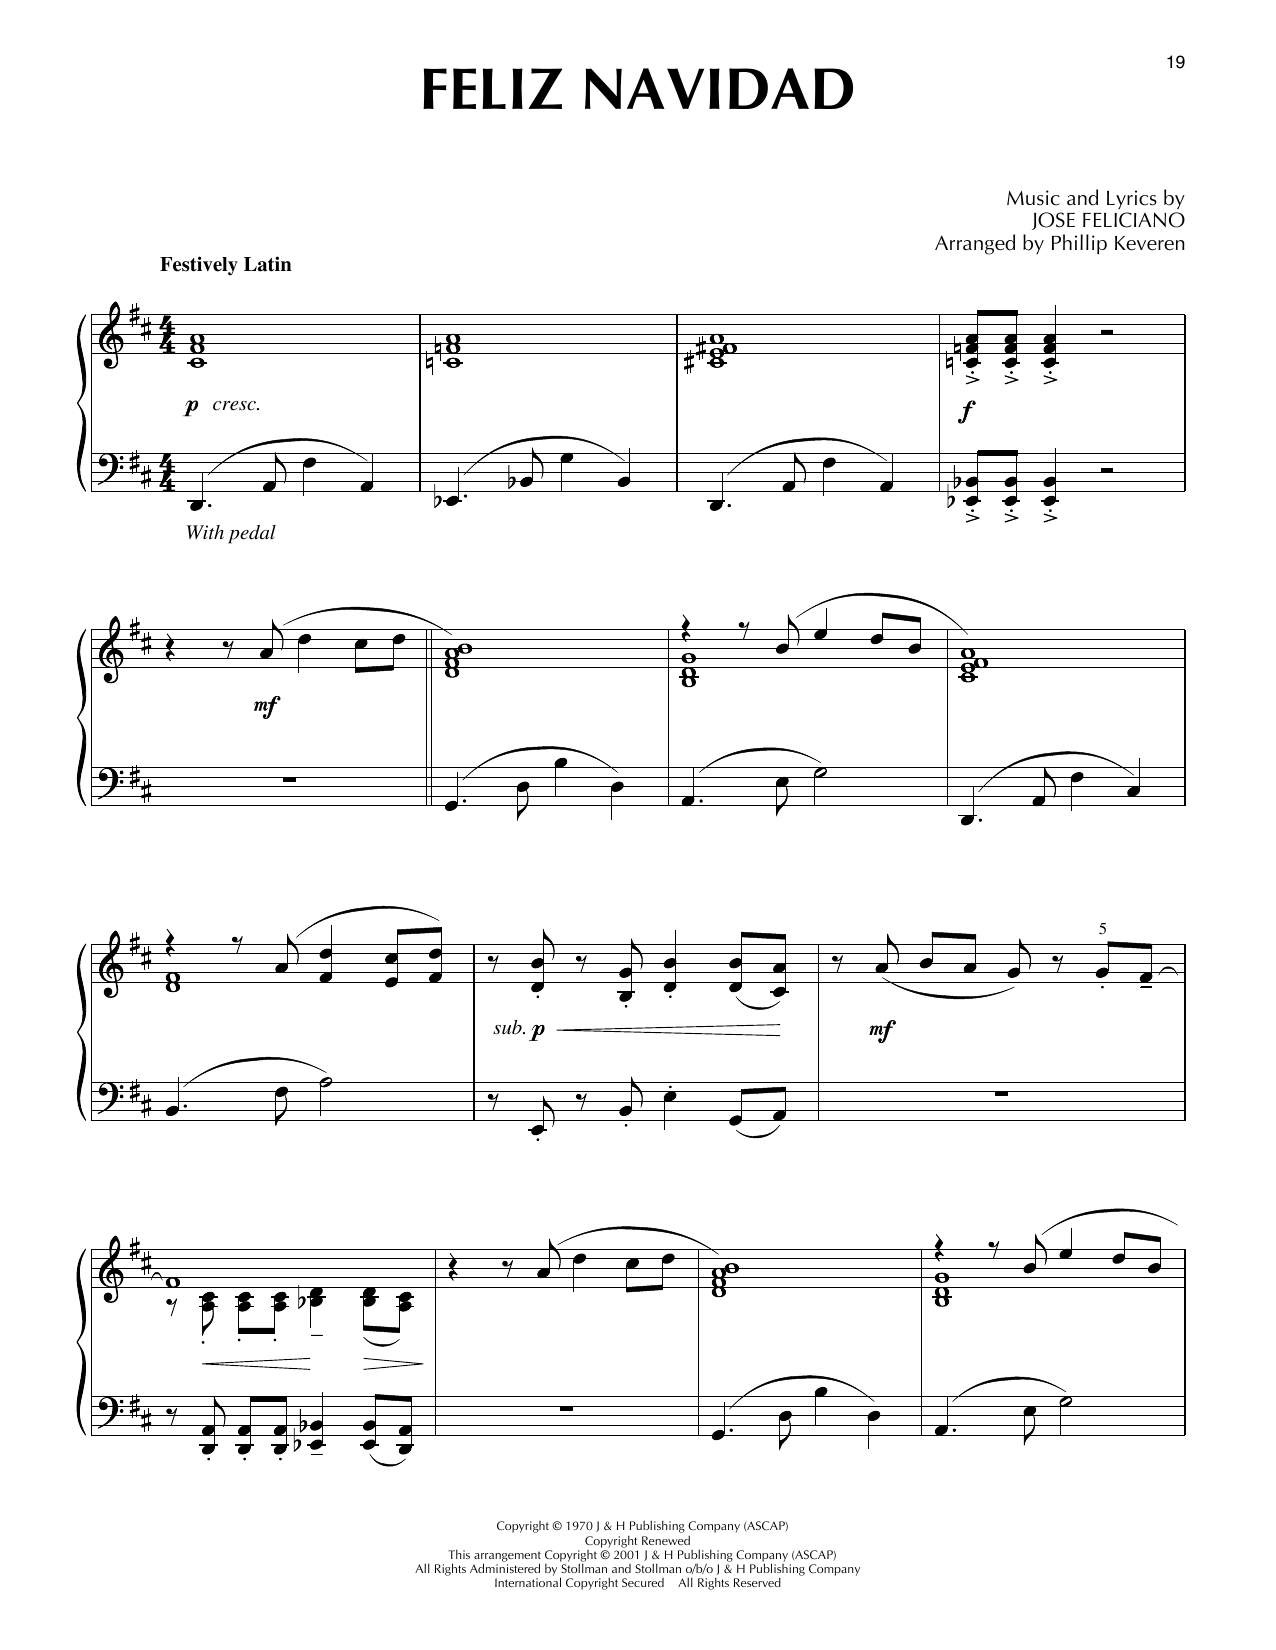 Jose Feliciano Feliz Navidad [Jazz version] (arr. Phillip Keveren) Sheet Music Notes & Chords for Piano Solo - Download or Print PDF